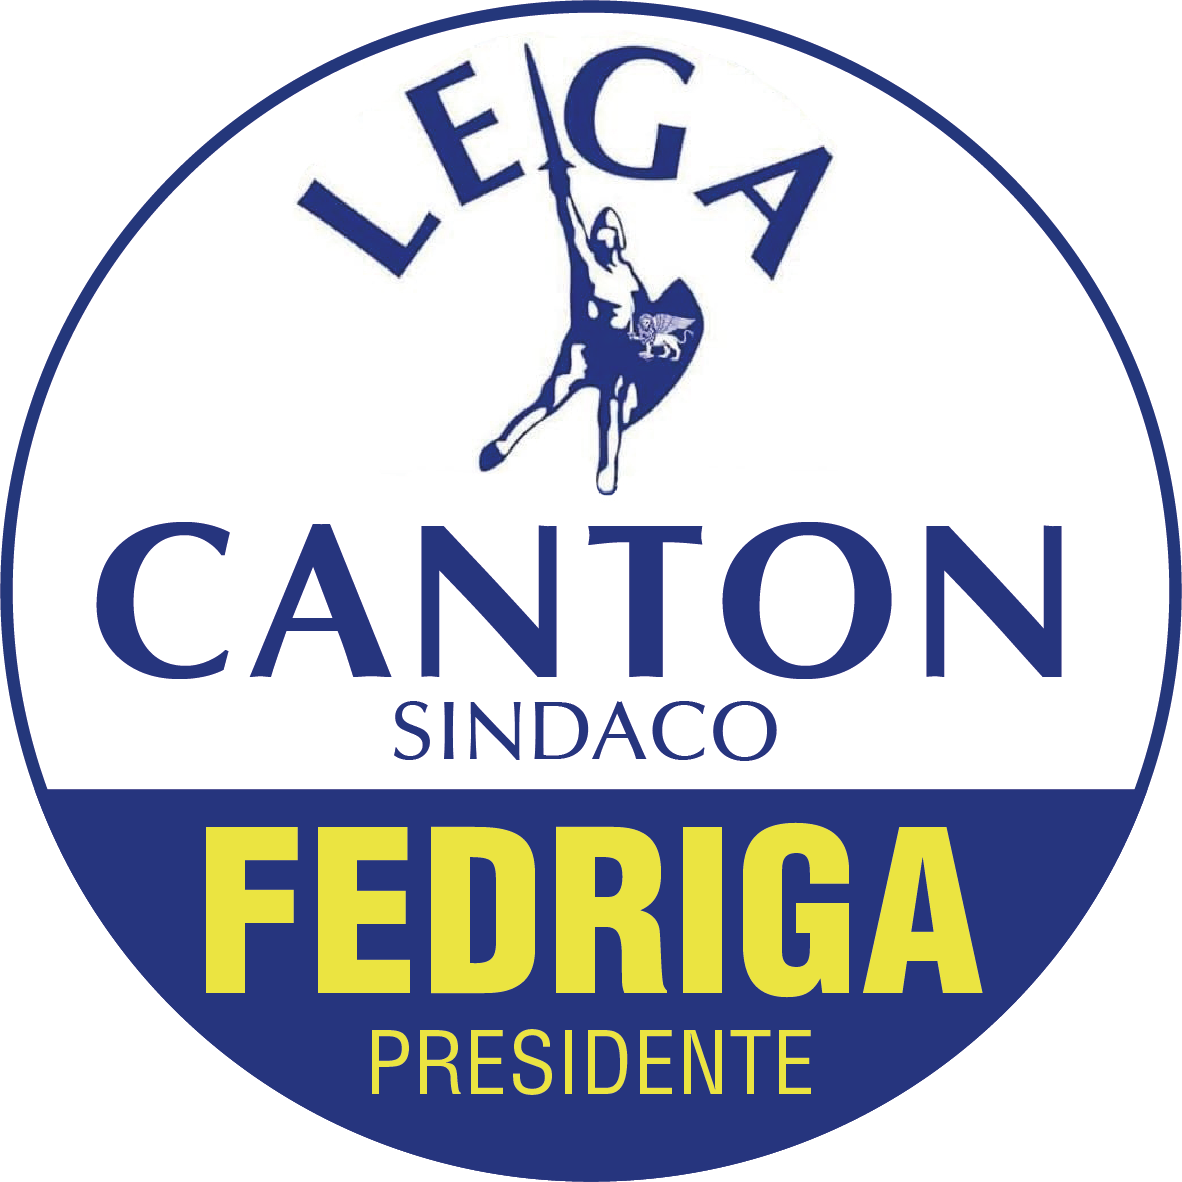 Lega Canton Sindaco - Fedriga Presidente